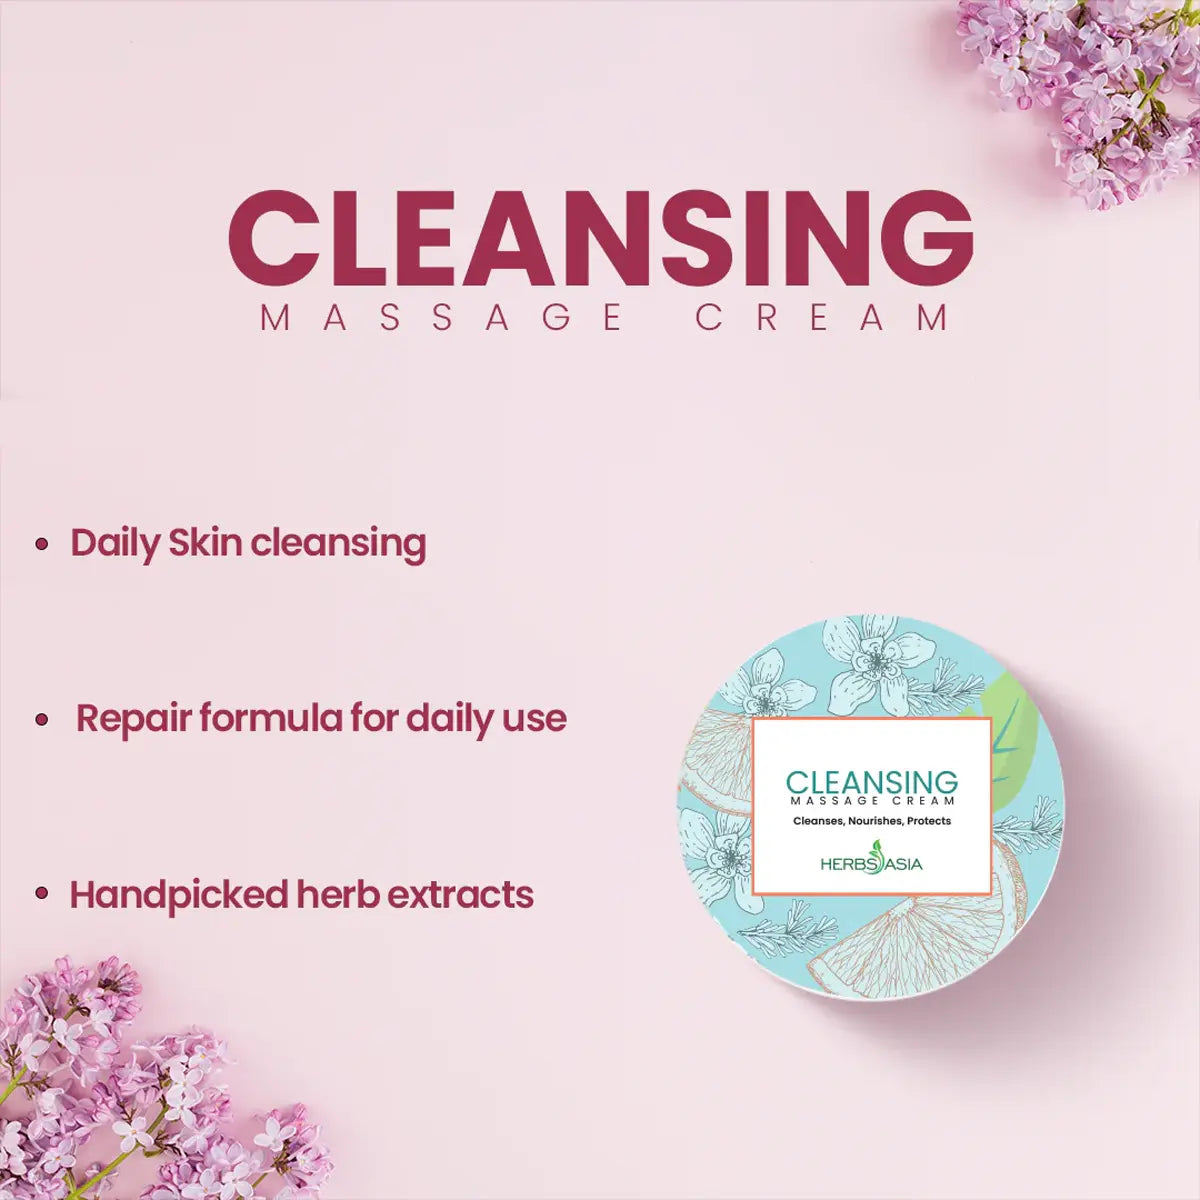 Cleansing Massage Cream